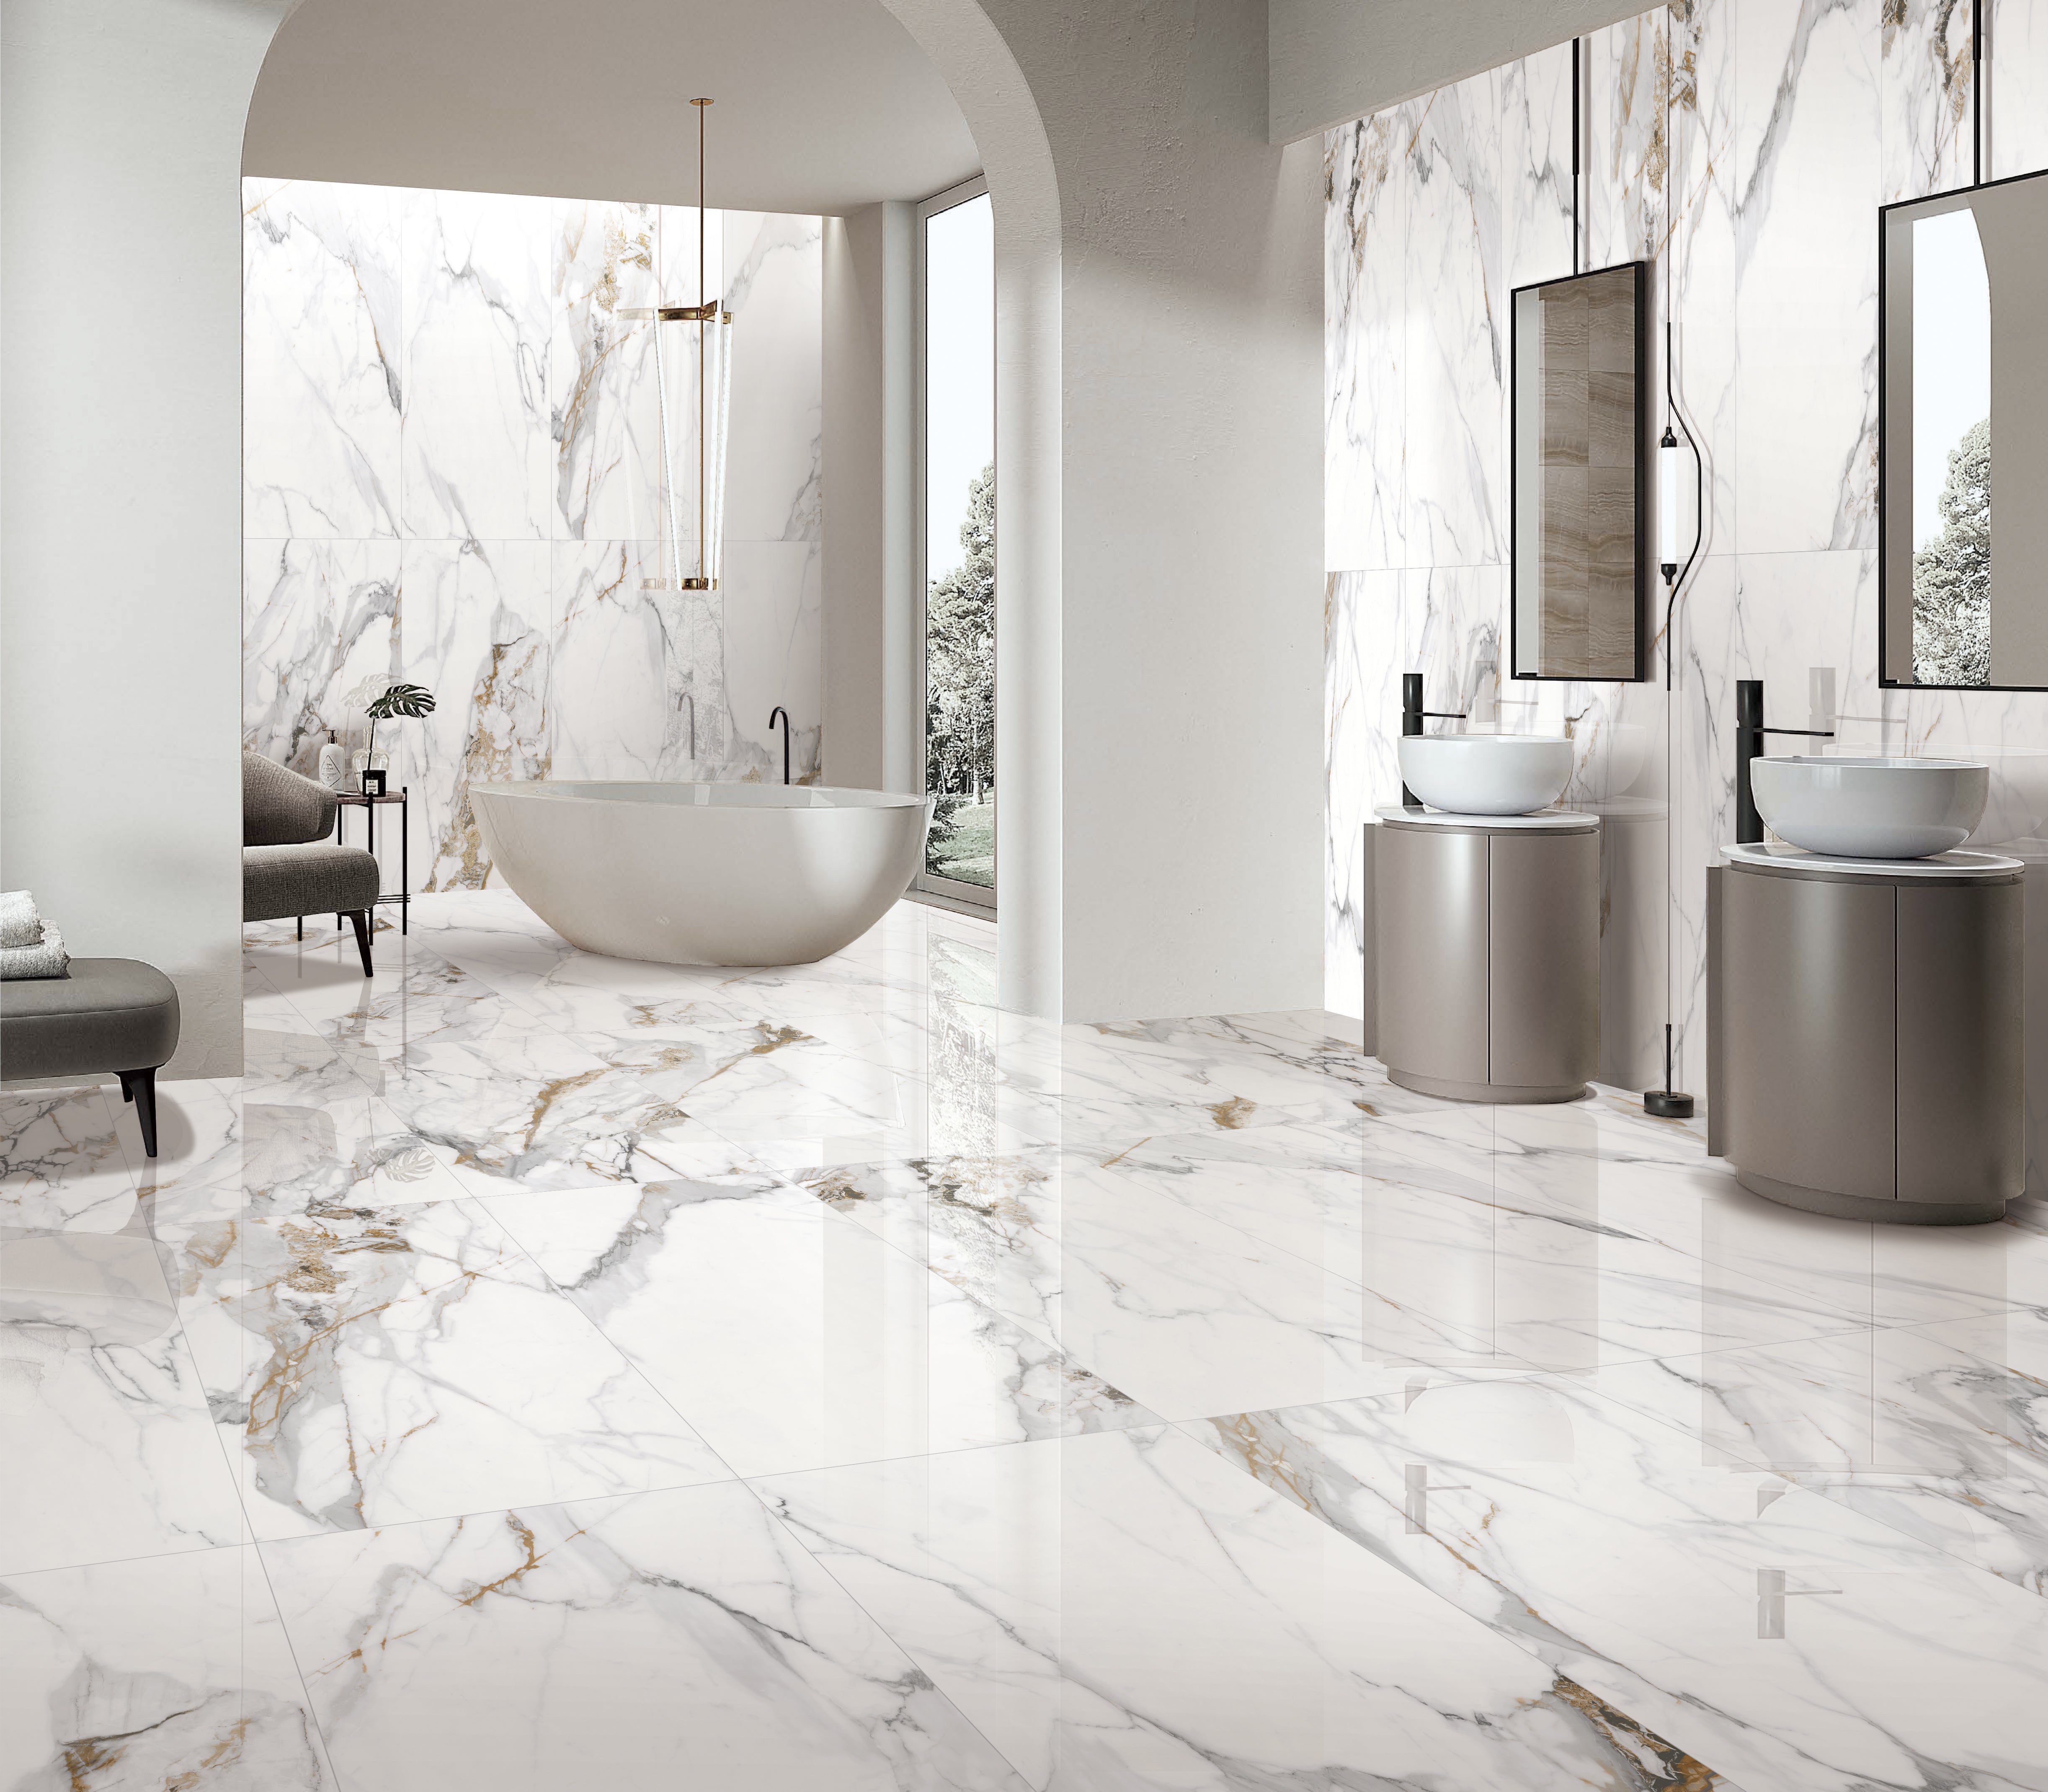 Luxury bathroom with marble tiles